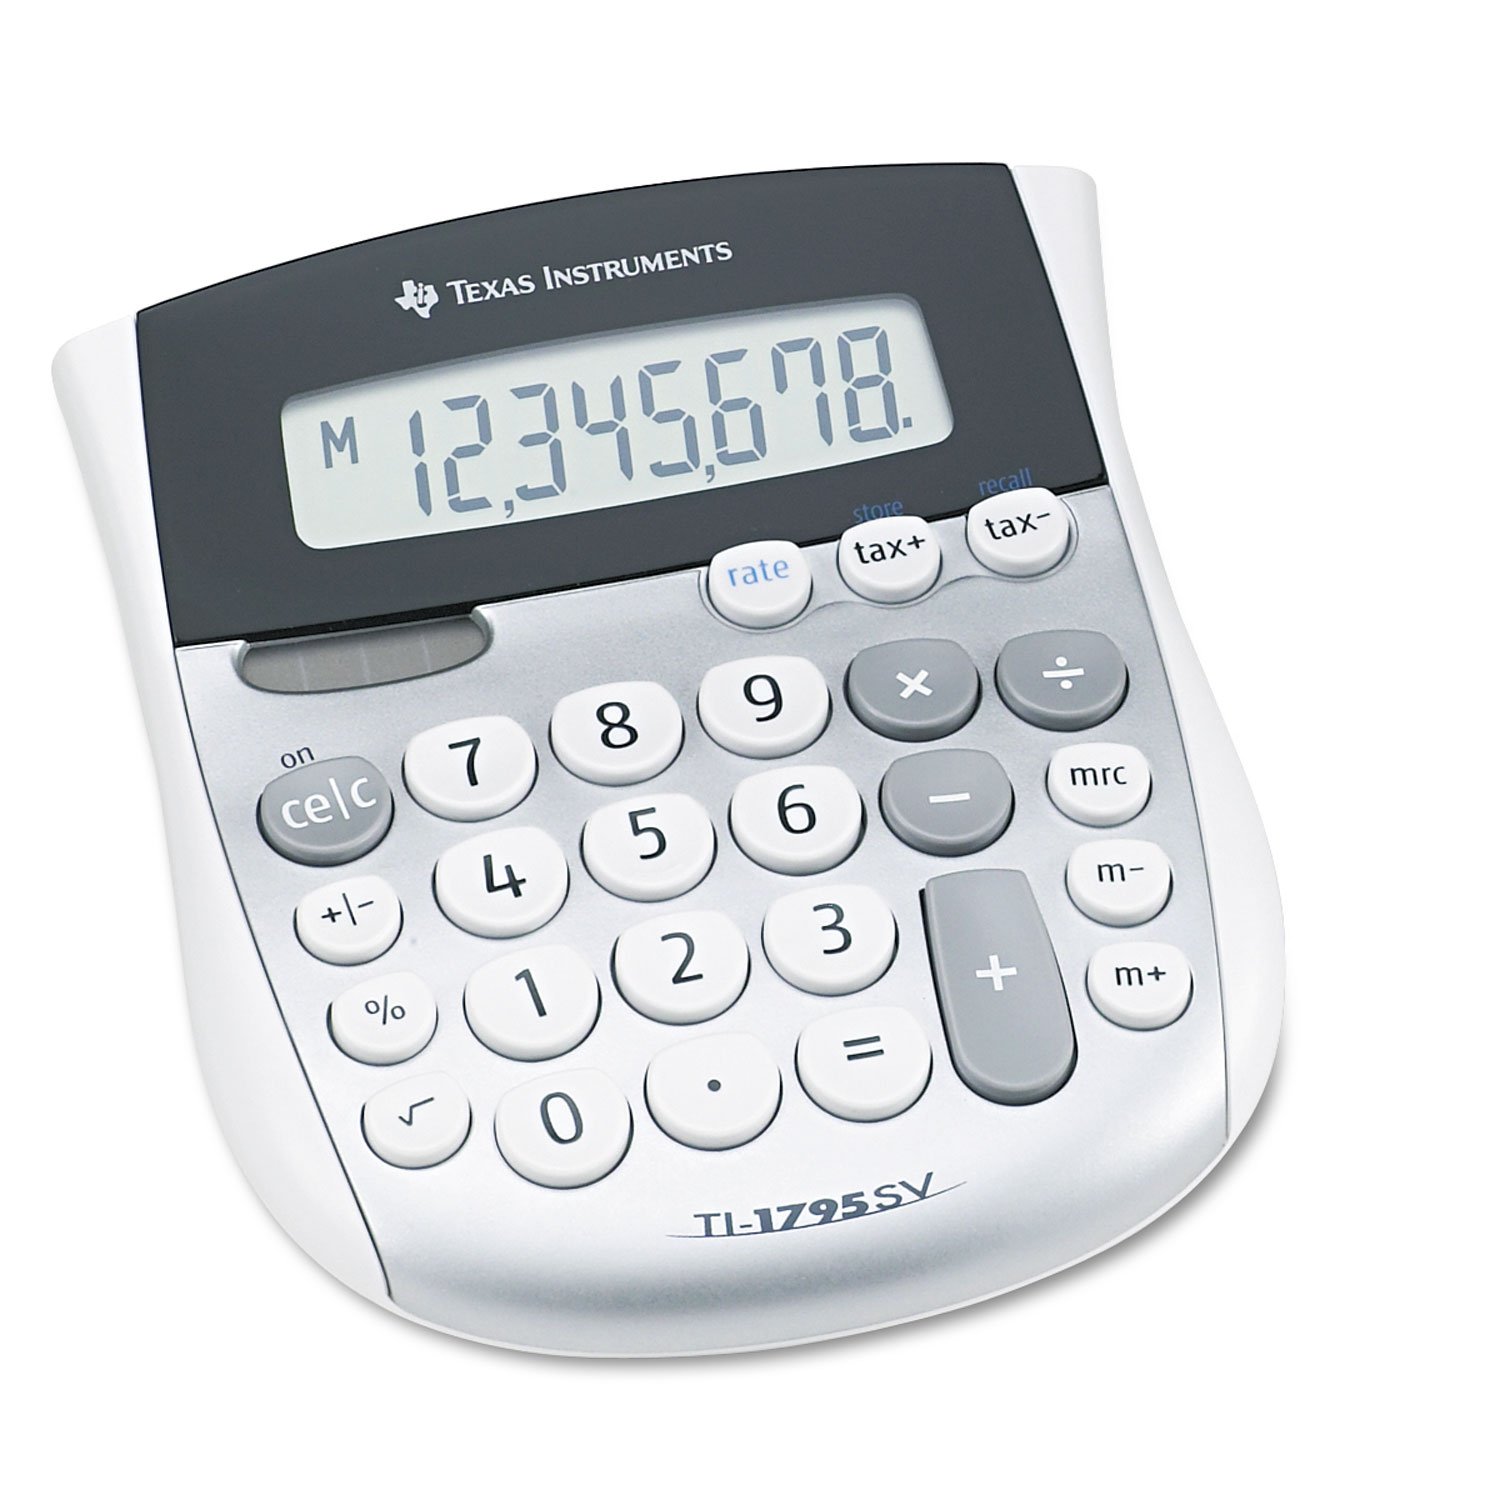 Texas Instruments TI1795SV TI-1795SV Minidesk Calculator, 8-Digit LCD